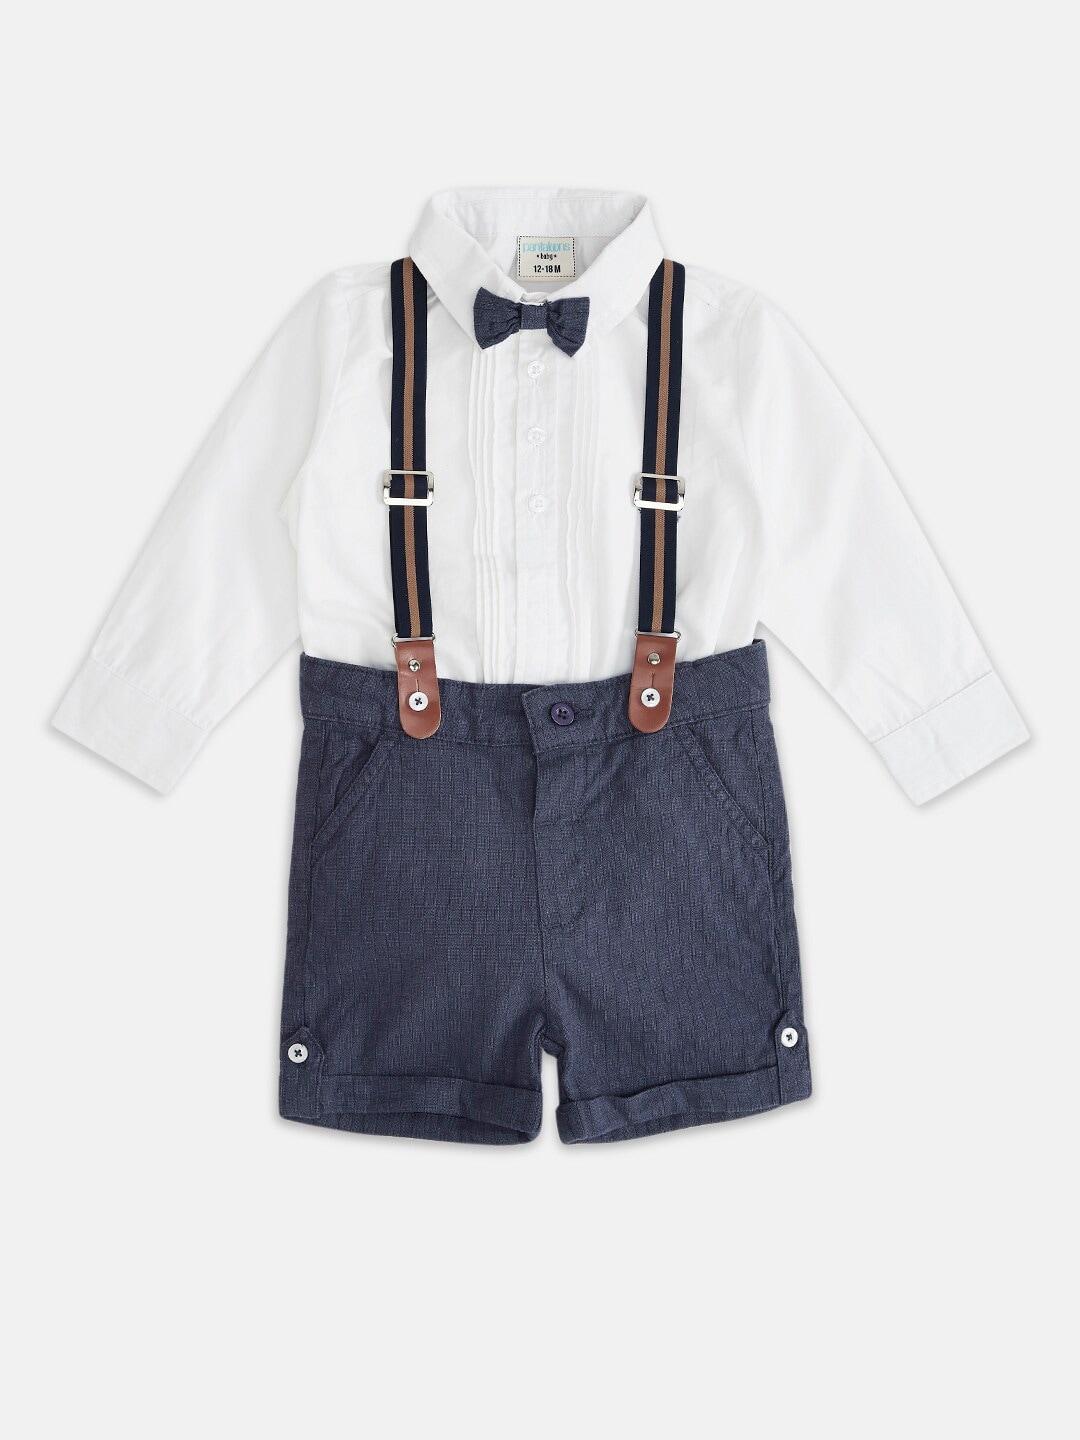 pantaloons baby boys navy blue & white pure cotton clothing set